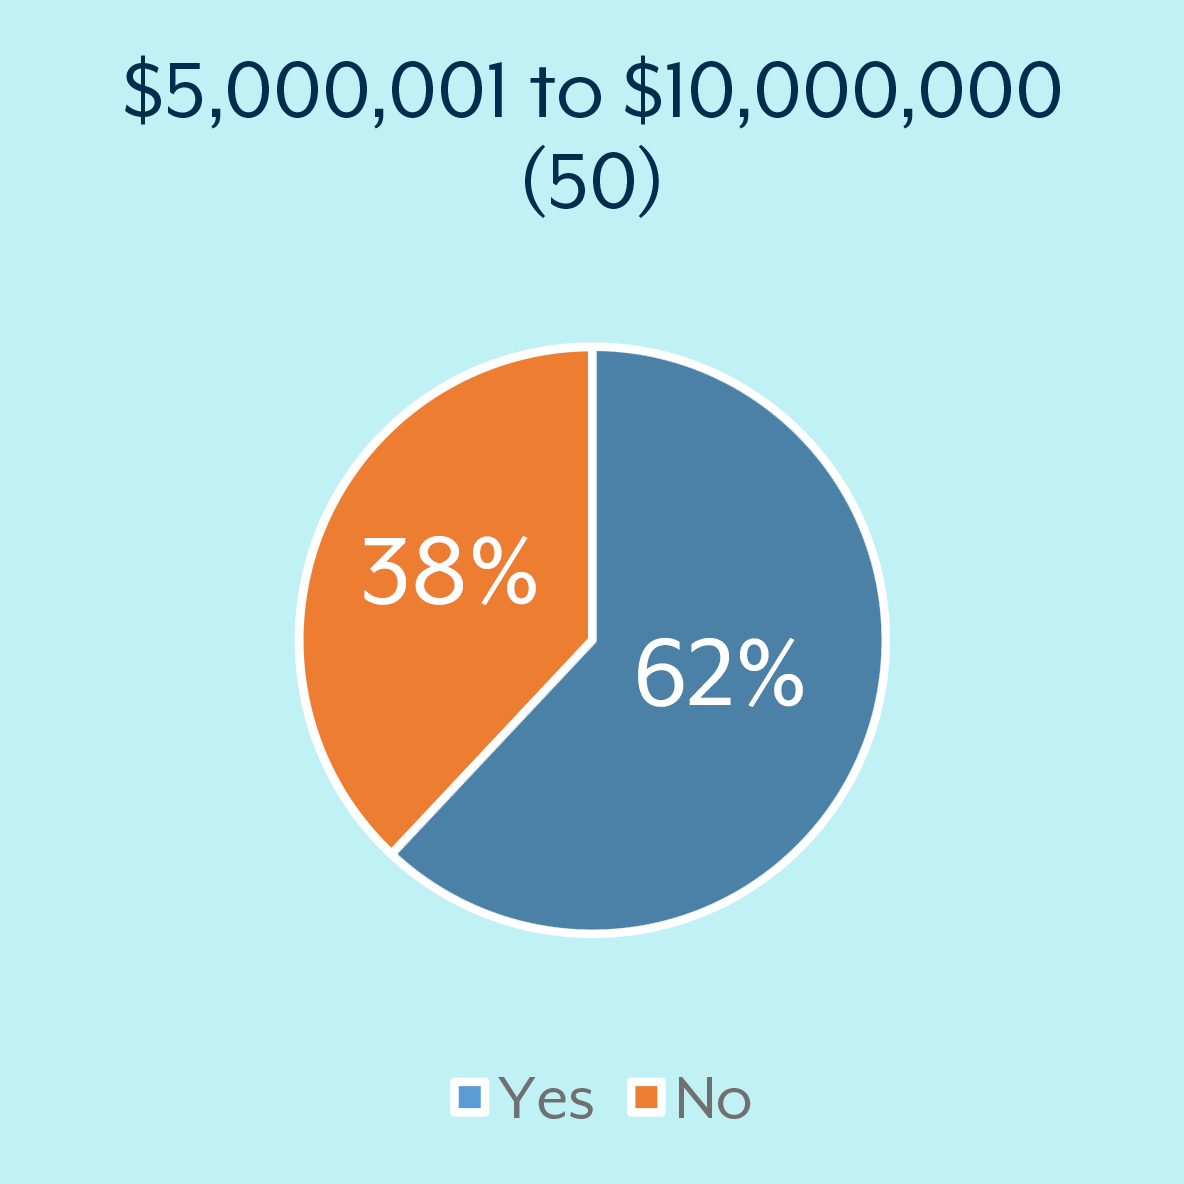 $5 million to $10 million: Yes = 62% No = 38%